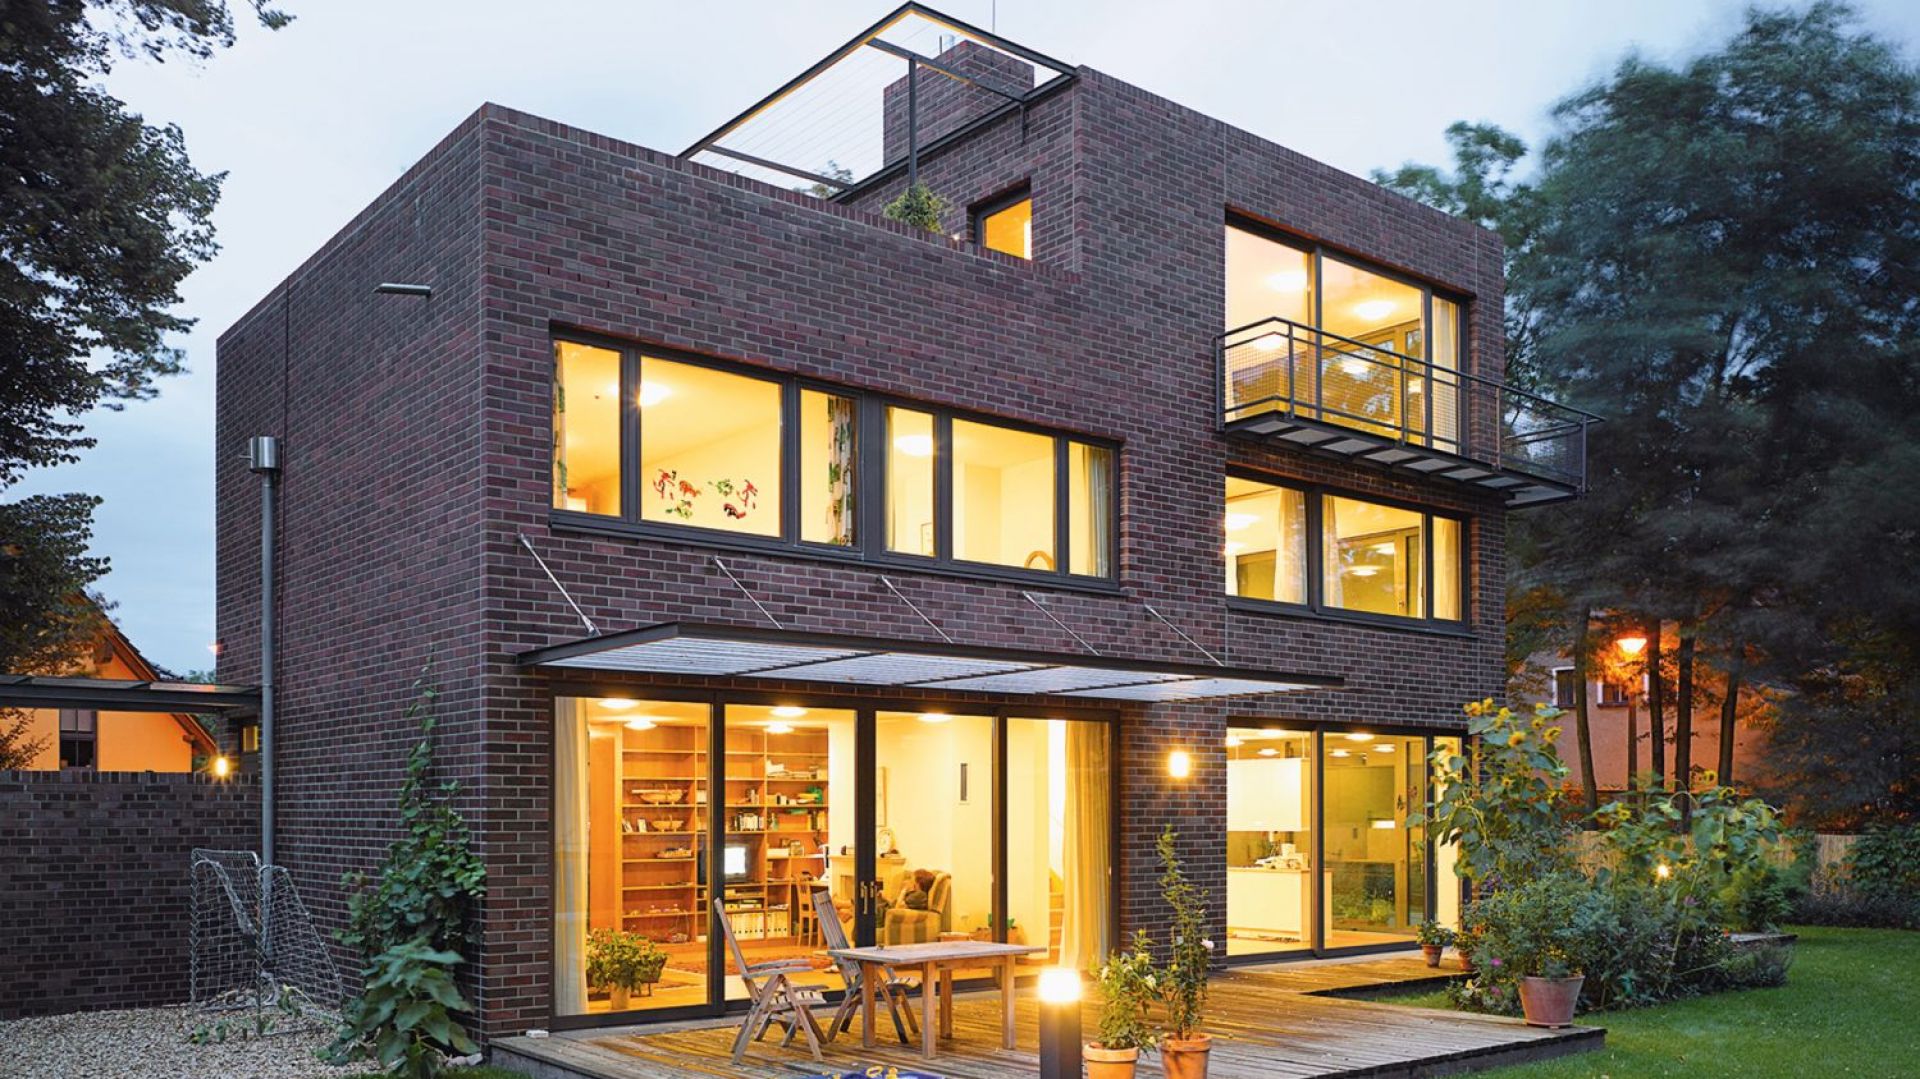 Projekt domu - jak rozplanować okna